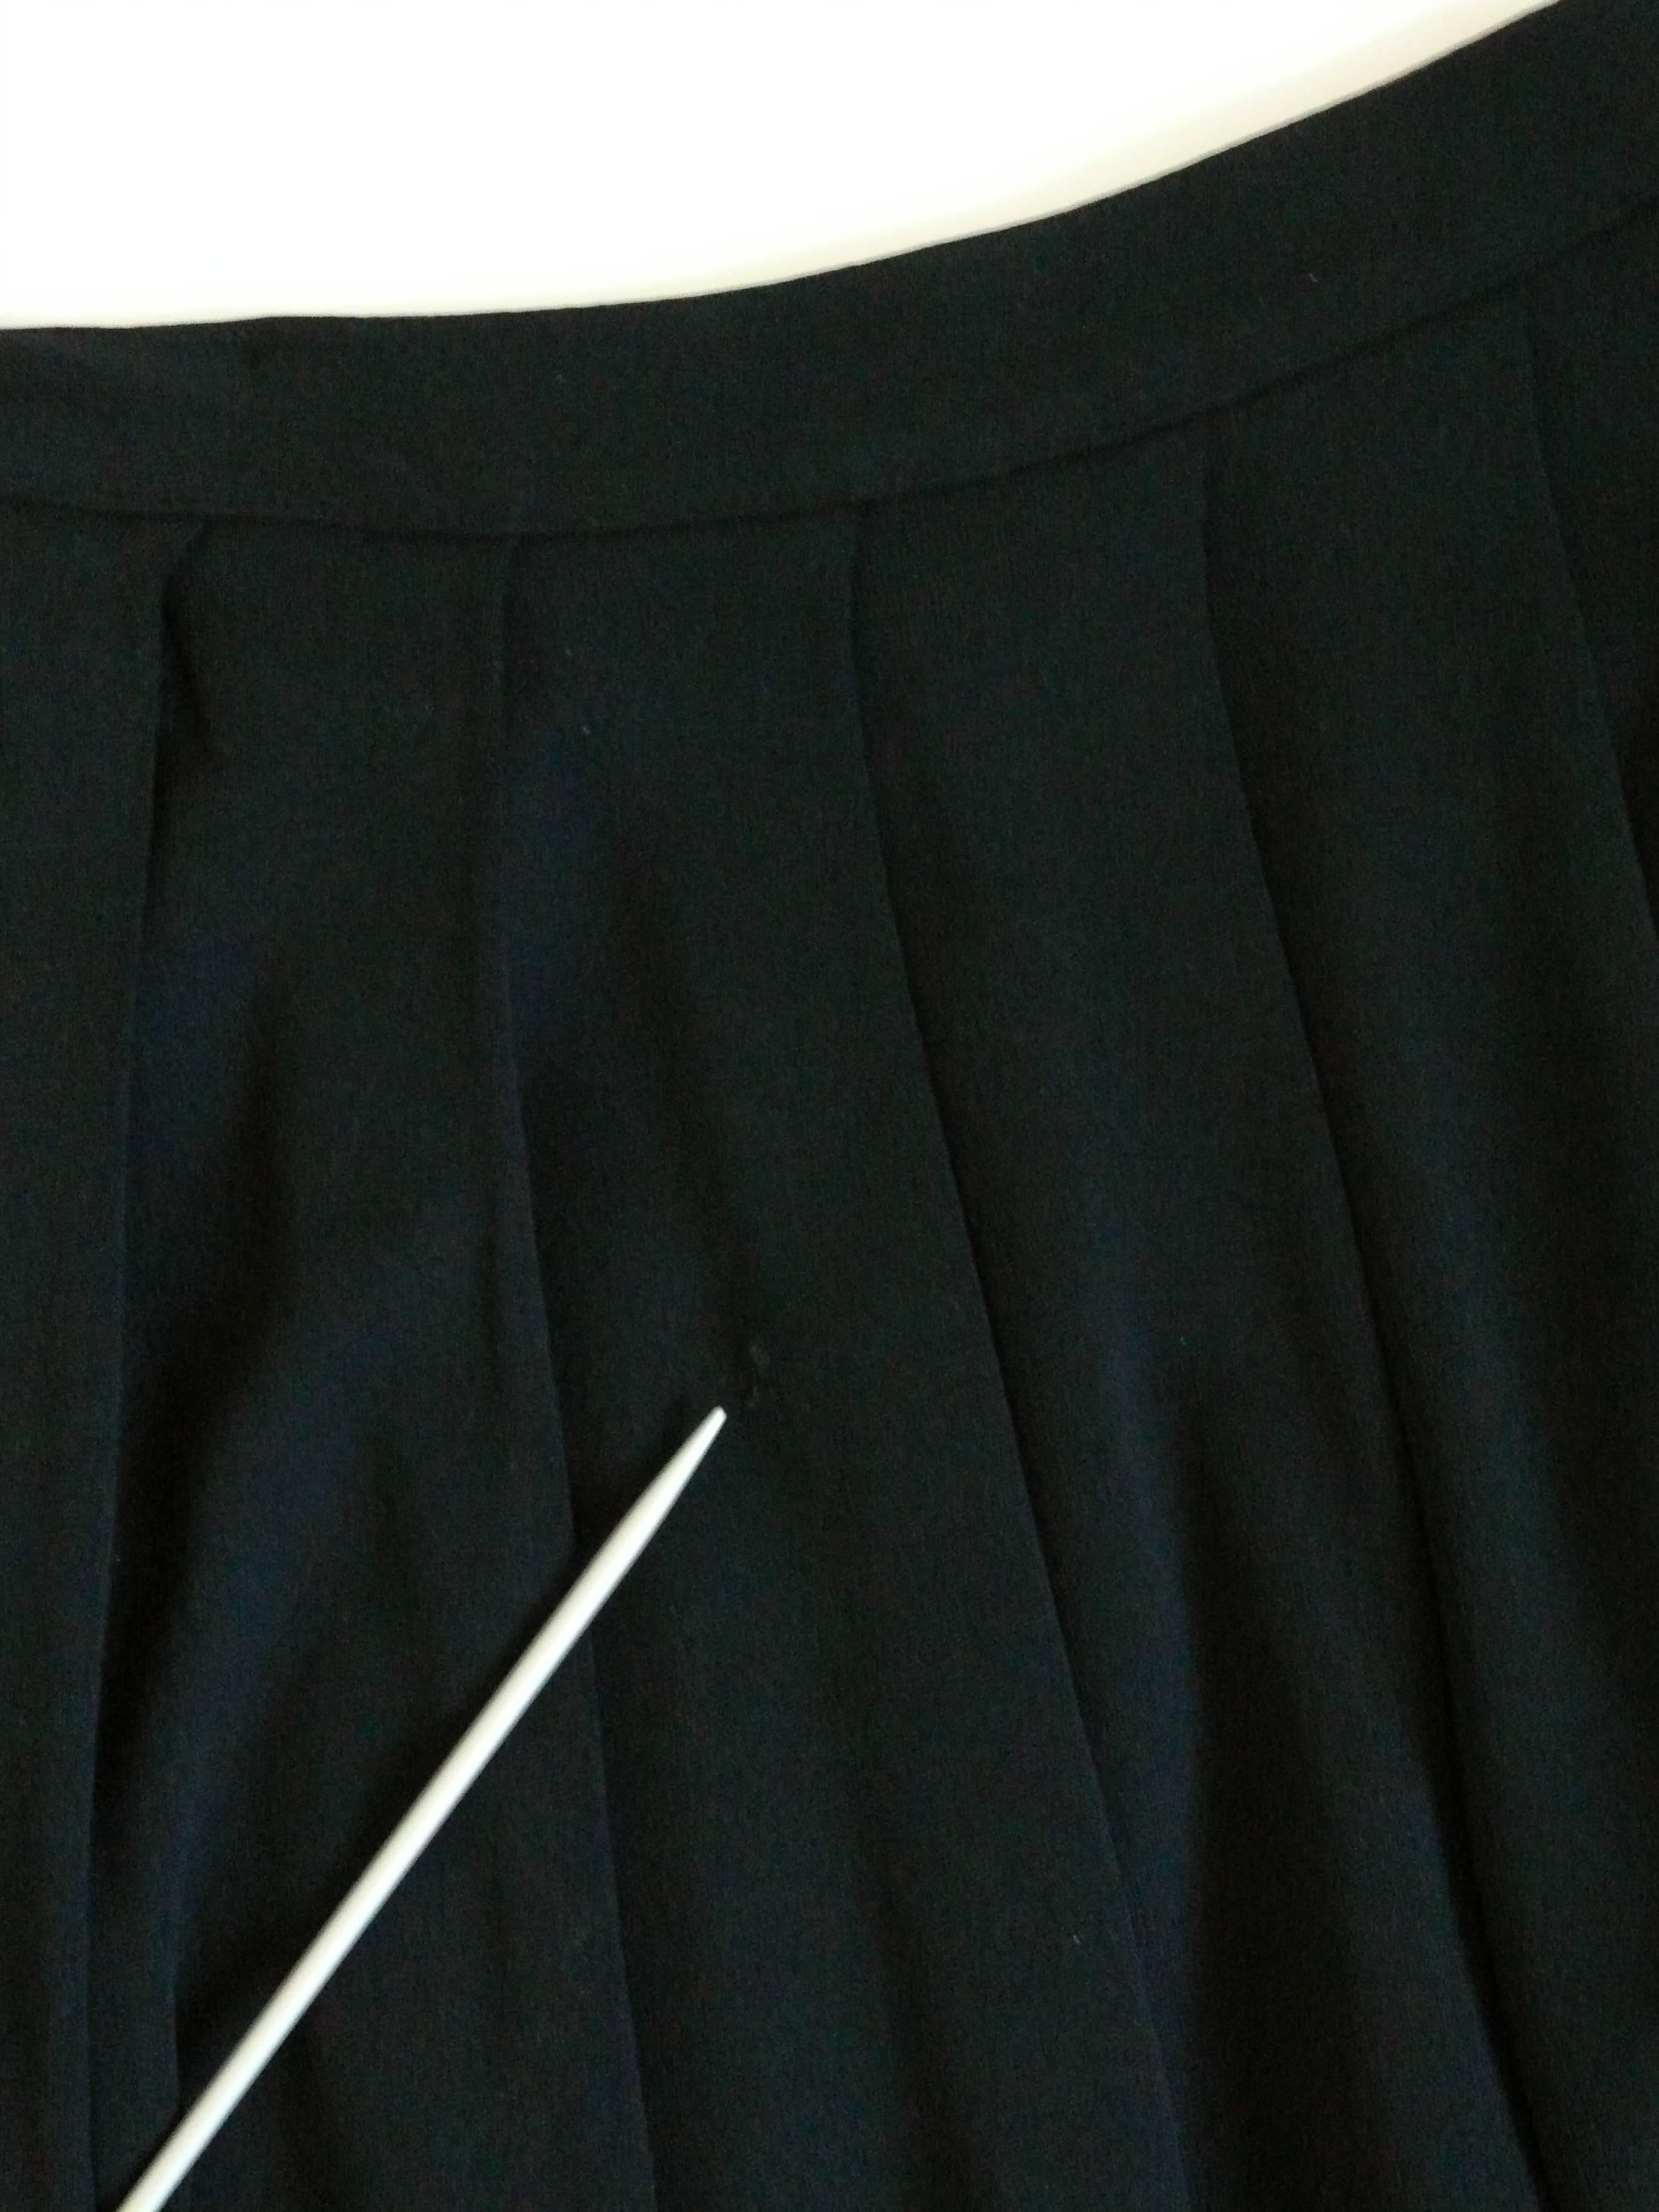 Jean Paul Gaultier Classique Vintage 1990s Rare Black Padded Skirt  For Sale 3